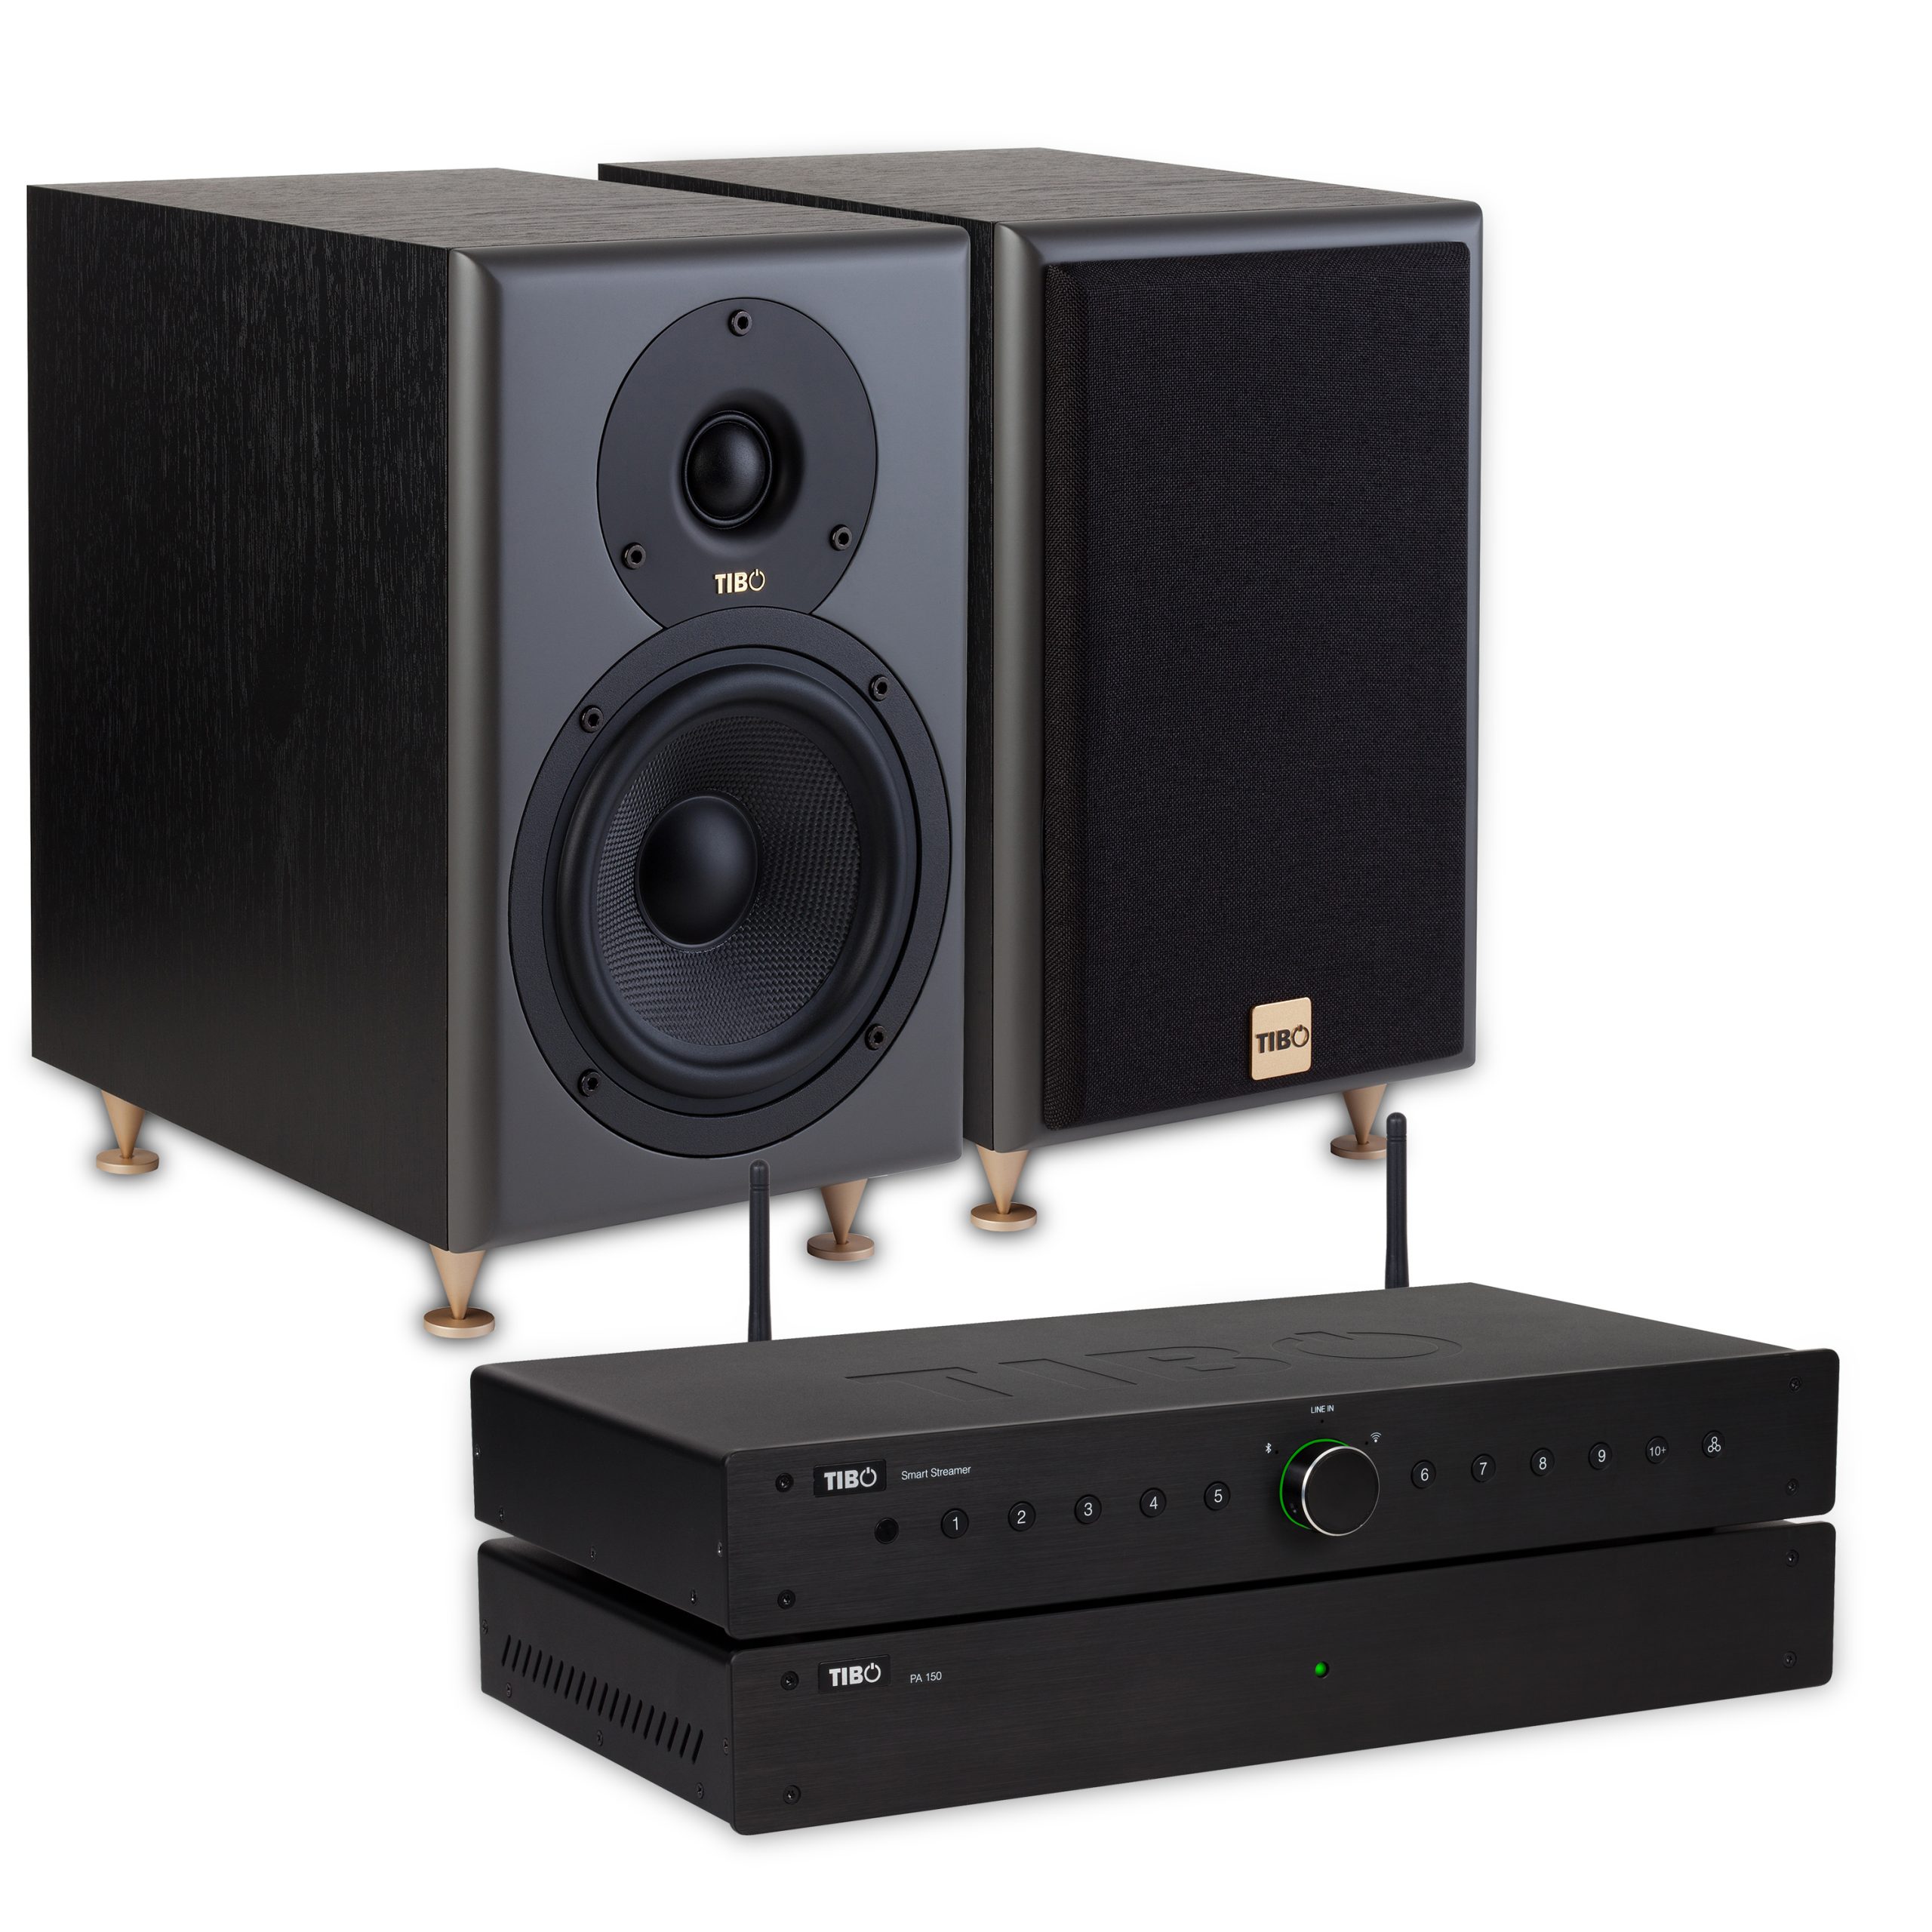 modnes Uendelighed en kreditor TIBO Legacy 3+ / Smart Streamer / PA150 Amplifier Review - TIBO Audio